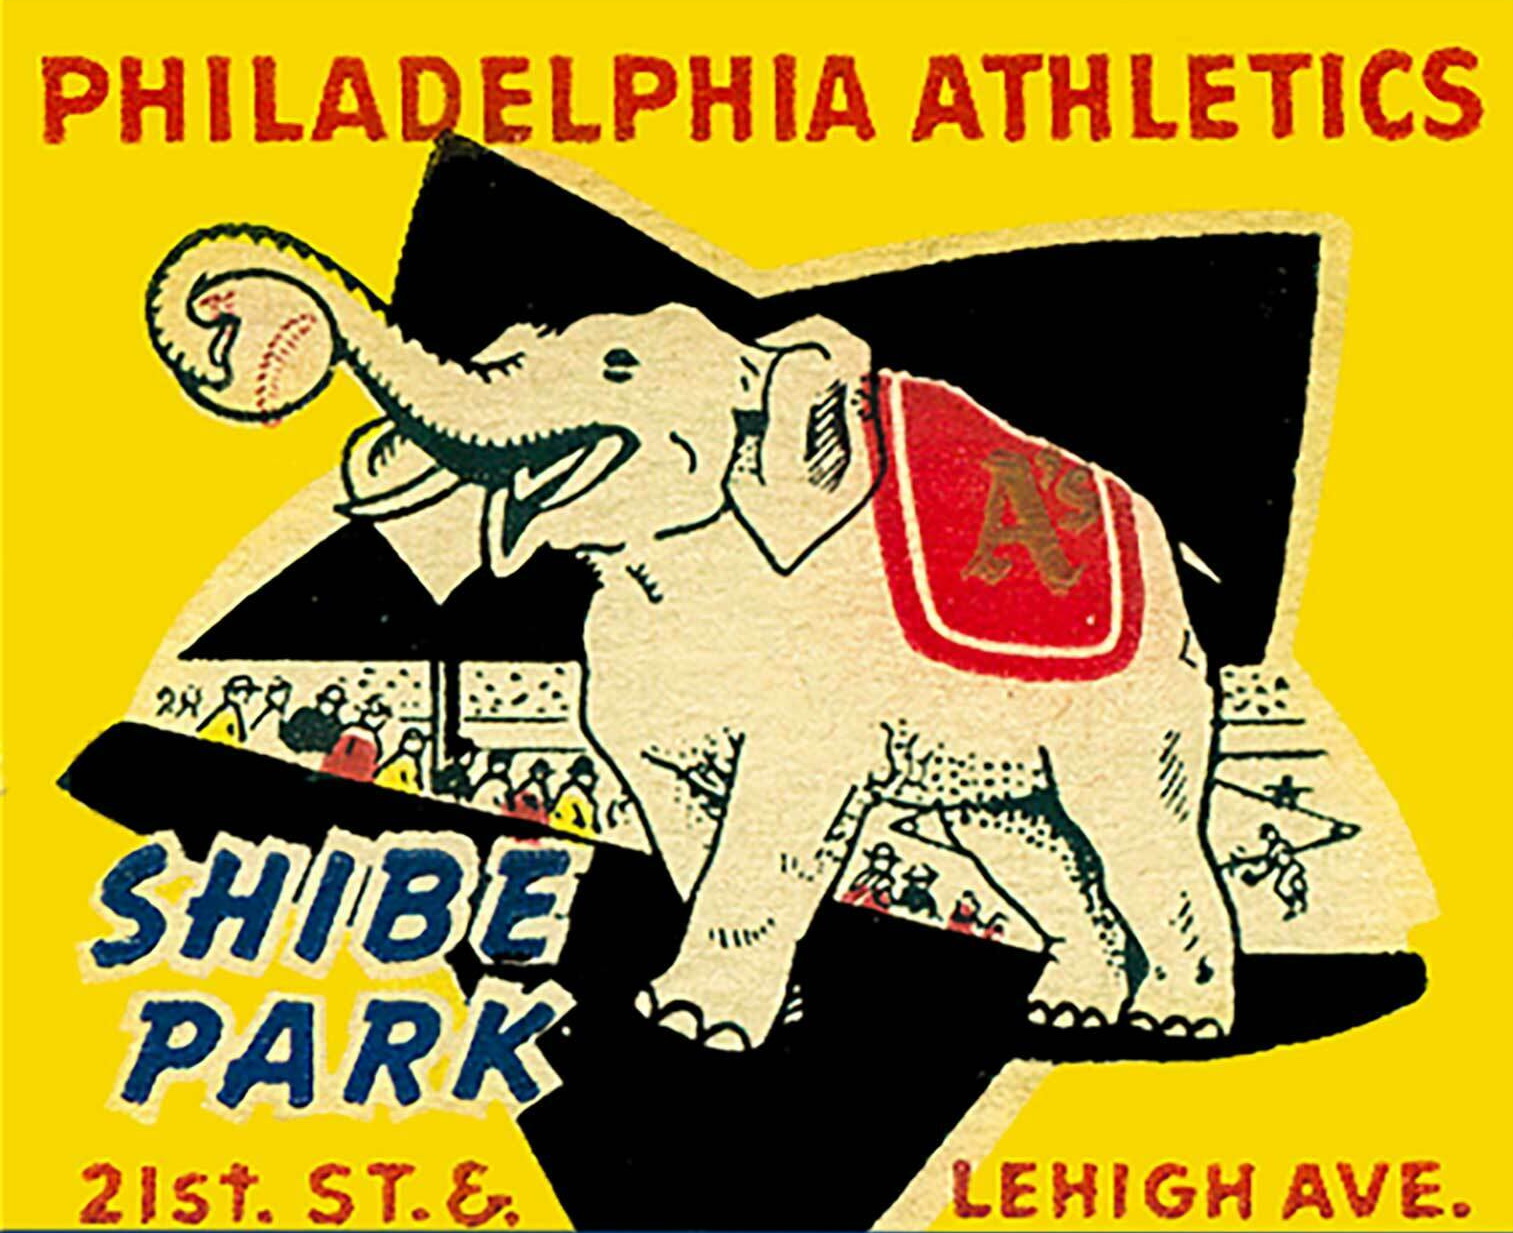 Shibe Park - Wikipedia